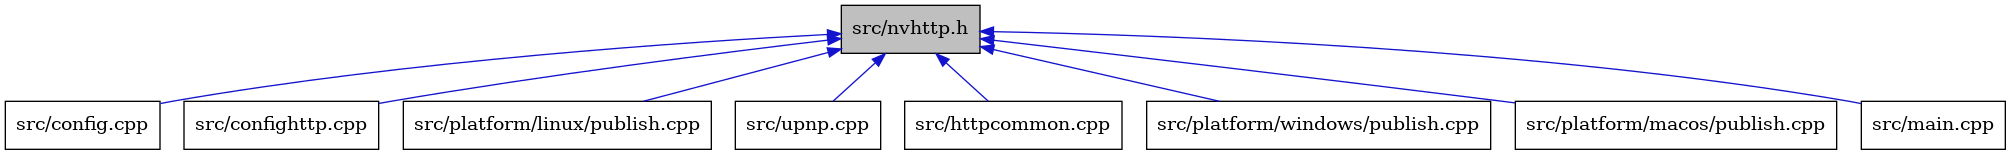 digraph {
    graph [bgcolor="#00000000"]
    node [shape=rectangle style=filled fillcolor="#FFFFFF" font=Helvetica padding=2]
    edge [color="#1414CE"]
    "2" [label="src/config.cpp" tooltip="src/config.cpp"]
    "3" [label="src/confighttp.cpp" tooltip="src/confighttp.cpp"]
    "6" [label="src/platform/linux/publish.cpp" tooltip="src/platform/linux/publish.cpp"]
    "9" [label="src/upnp.cpp" tooltip="src/upnp.cpp"]
    "4" [label="src/httpcommon.cpp" tooltip="src/httpcommon.cpp"]
    "1" [label="src/nvhttp.h" tooltip="src/nvhttp.h" fillcolor="#BFBFBF"]
    "8" [label="src/platform/windows/publish.cpp" tooltip="src/platform/windows/publish.cpp"]
    "7" [label="src/platform/macos/publish.cpp" tooltip="src/platform/macos/publish.cpp"]
    "5" [label="src/main.cpp" tooltip="src/main.cpp"]
    "1" -> "2" [dir=back tooltip="include"]
    "1" -> "3" [dir=back tooltip="include"]
    "1" -> "4" [dir=back tooltip="include"]
    "1" -> "5" [dir=back tooltip="include"]
    "1" -> "6" [dir=back tooltip="include"]
    "1" -> "7" [dir=back tooltip="include"]
    "1" -> "8" [dir=back tooltip="include"]
    "1" -> "9" [dir=back tooltip="include"]
}